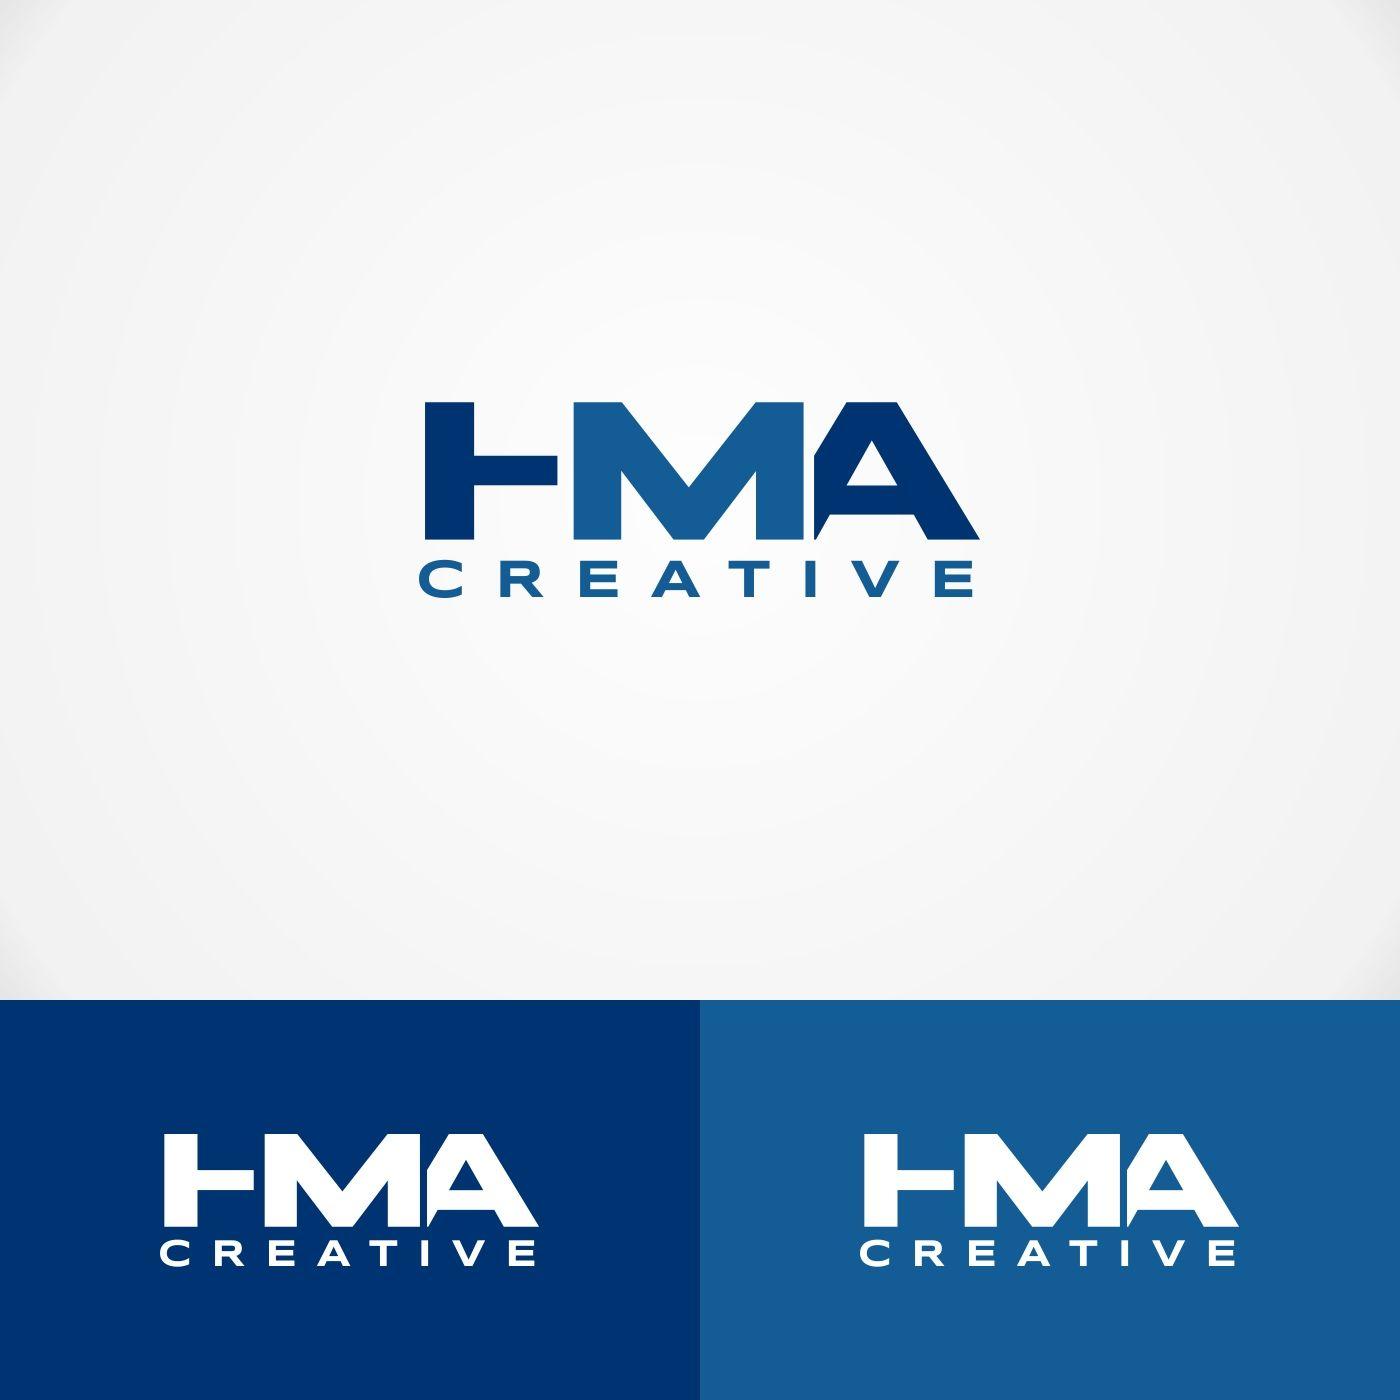 HMA Logo - Modern, Elegant, Promotional Product Logo Design for HMA Creative by ...